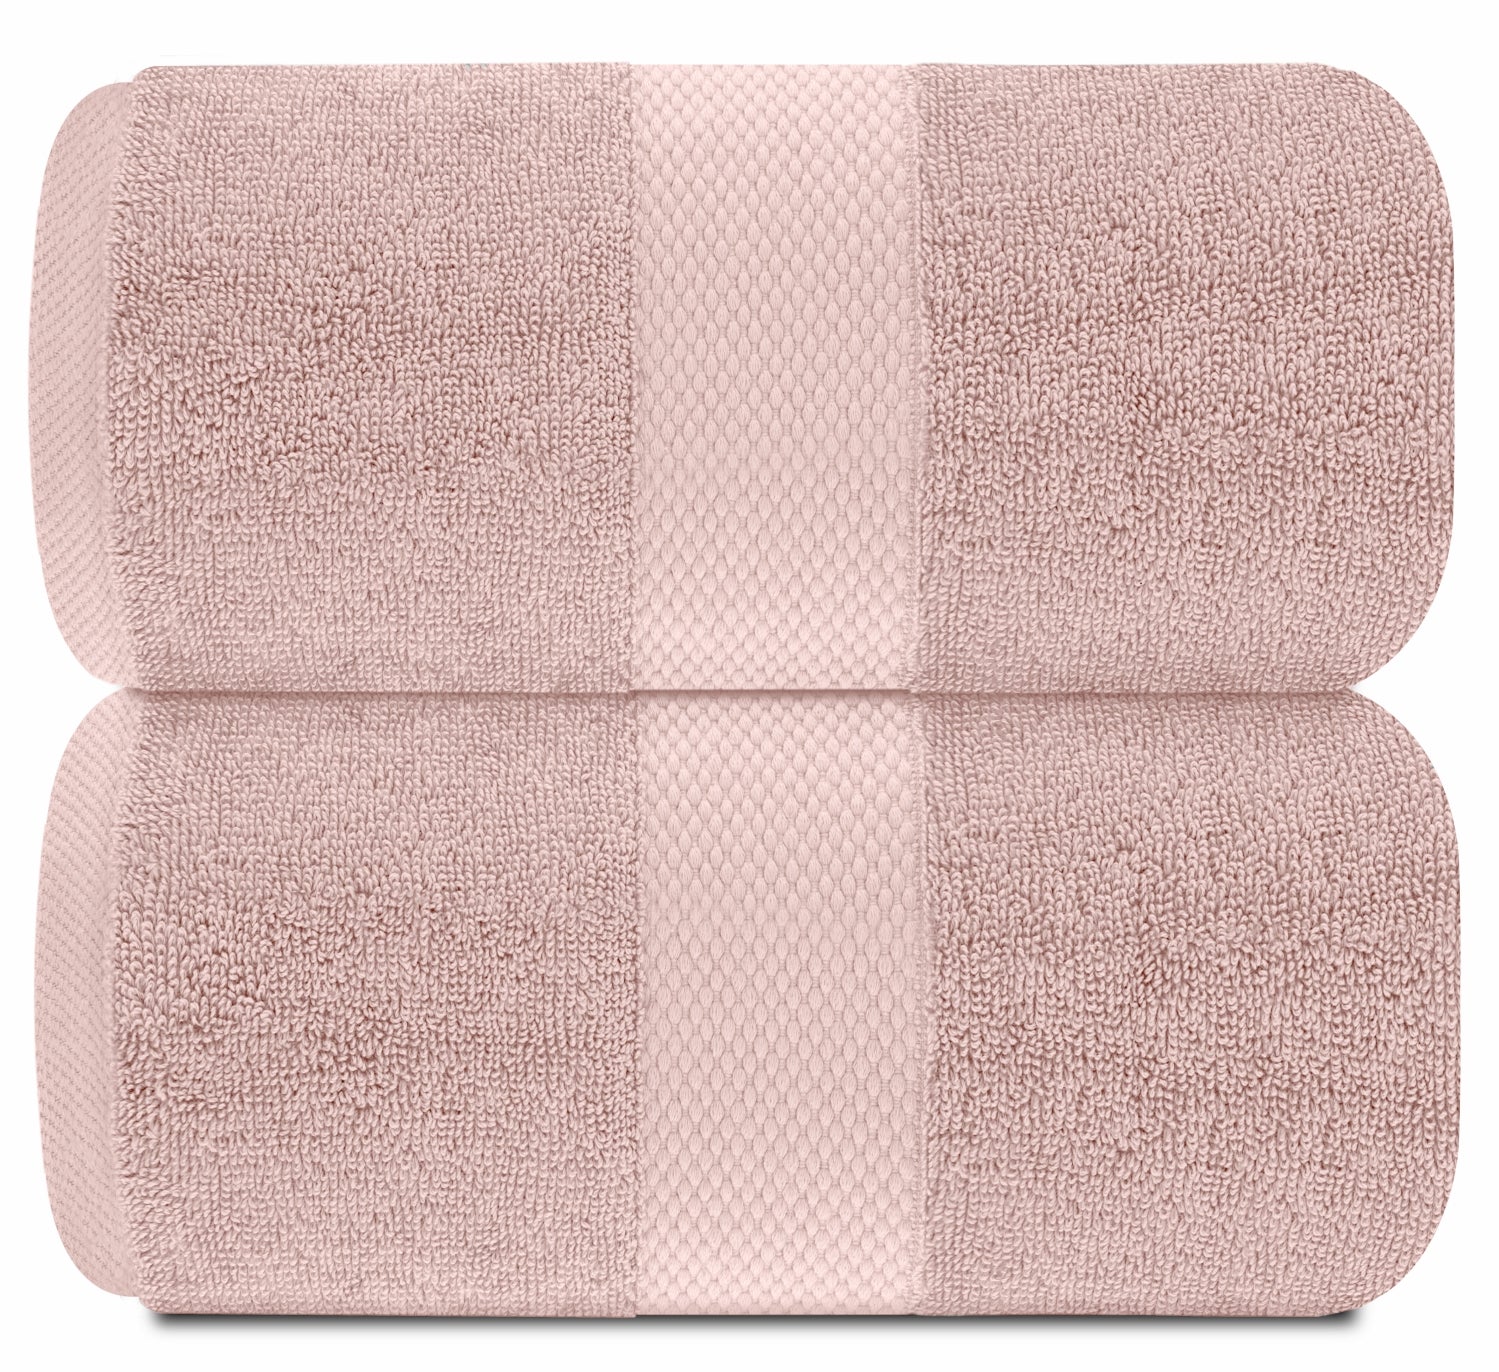 pink bath sheets